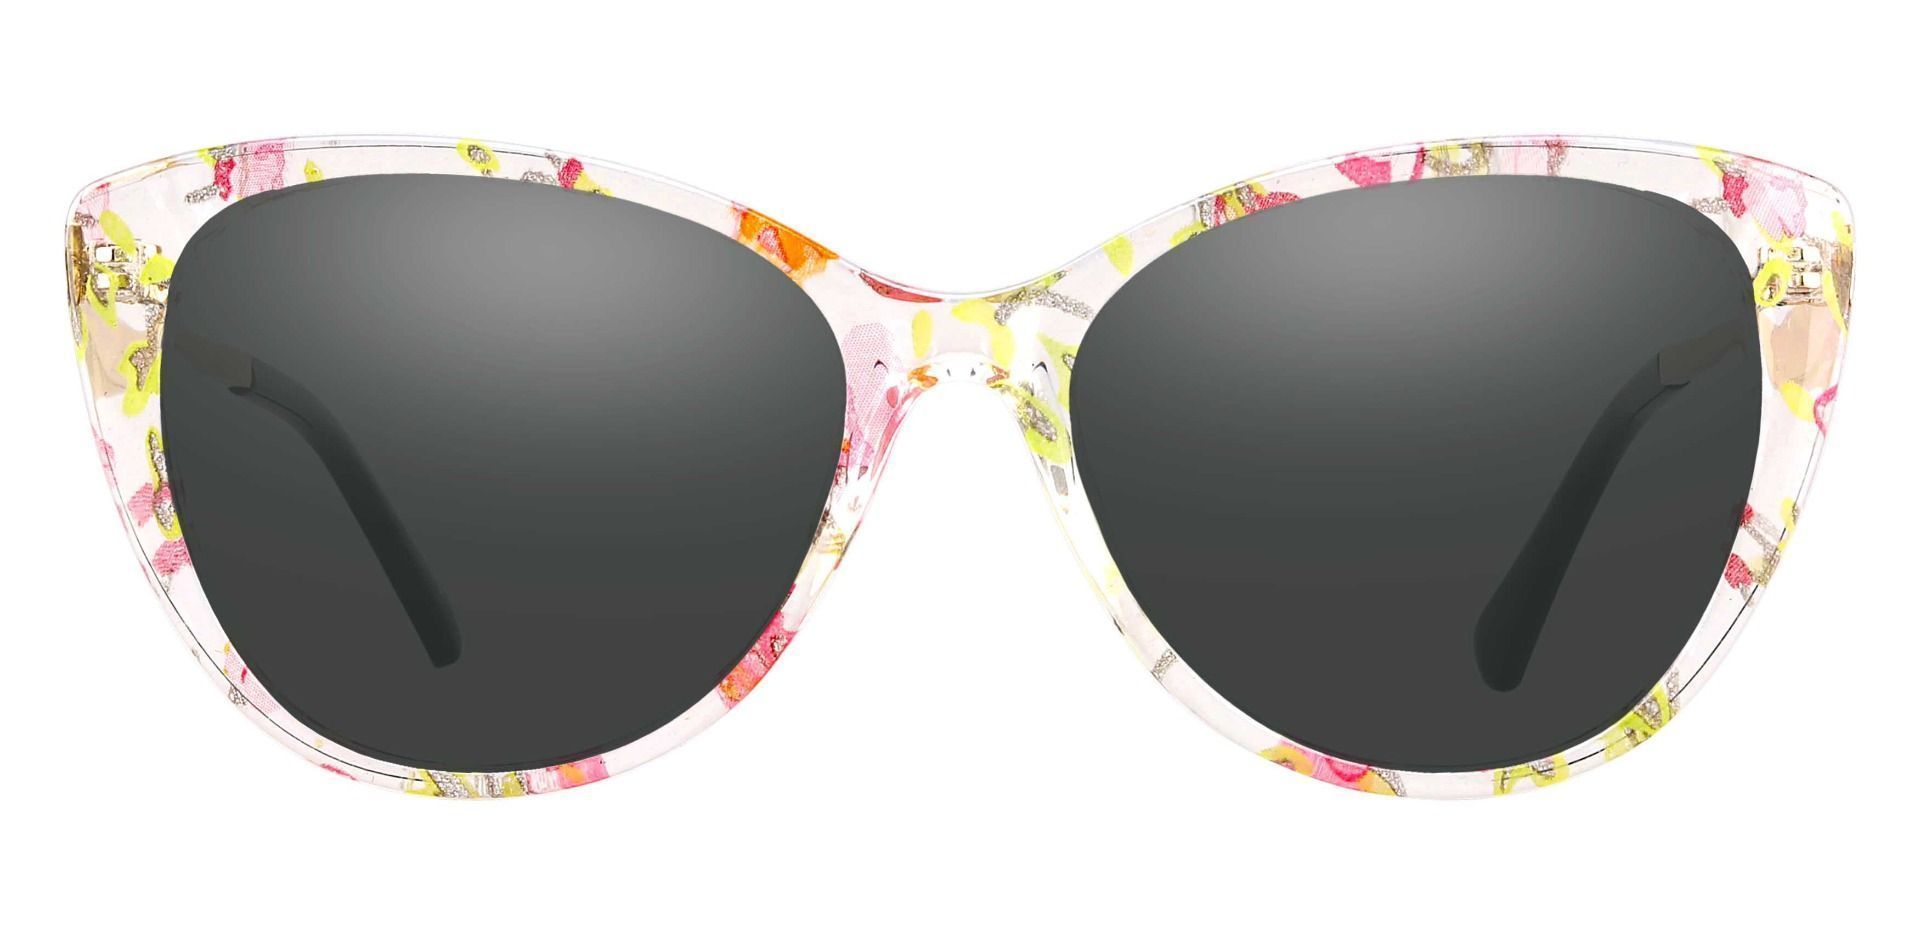 Roma Cat Eye Prescription Sunglasses - Floral Frame With Gray Lenses